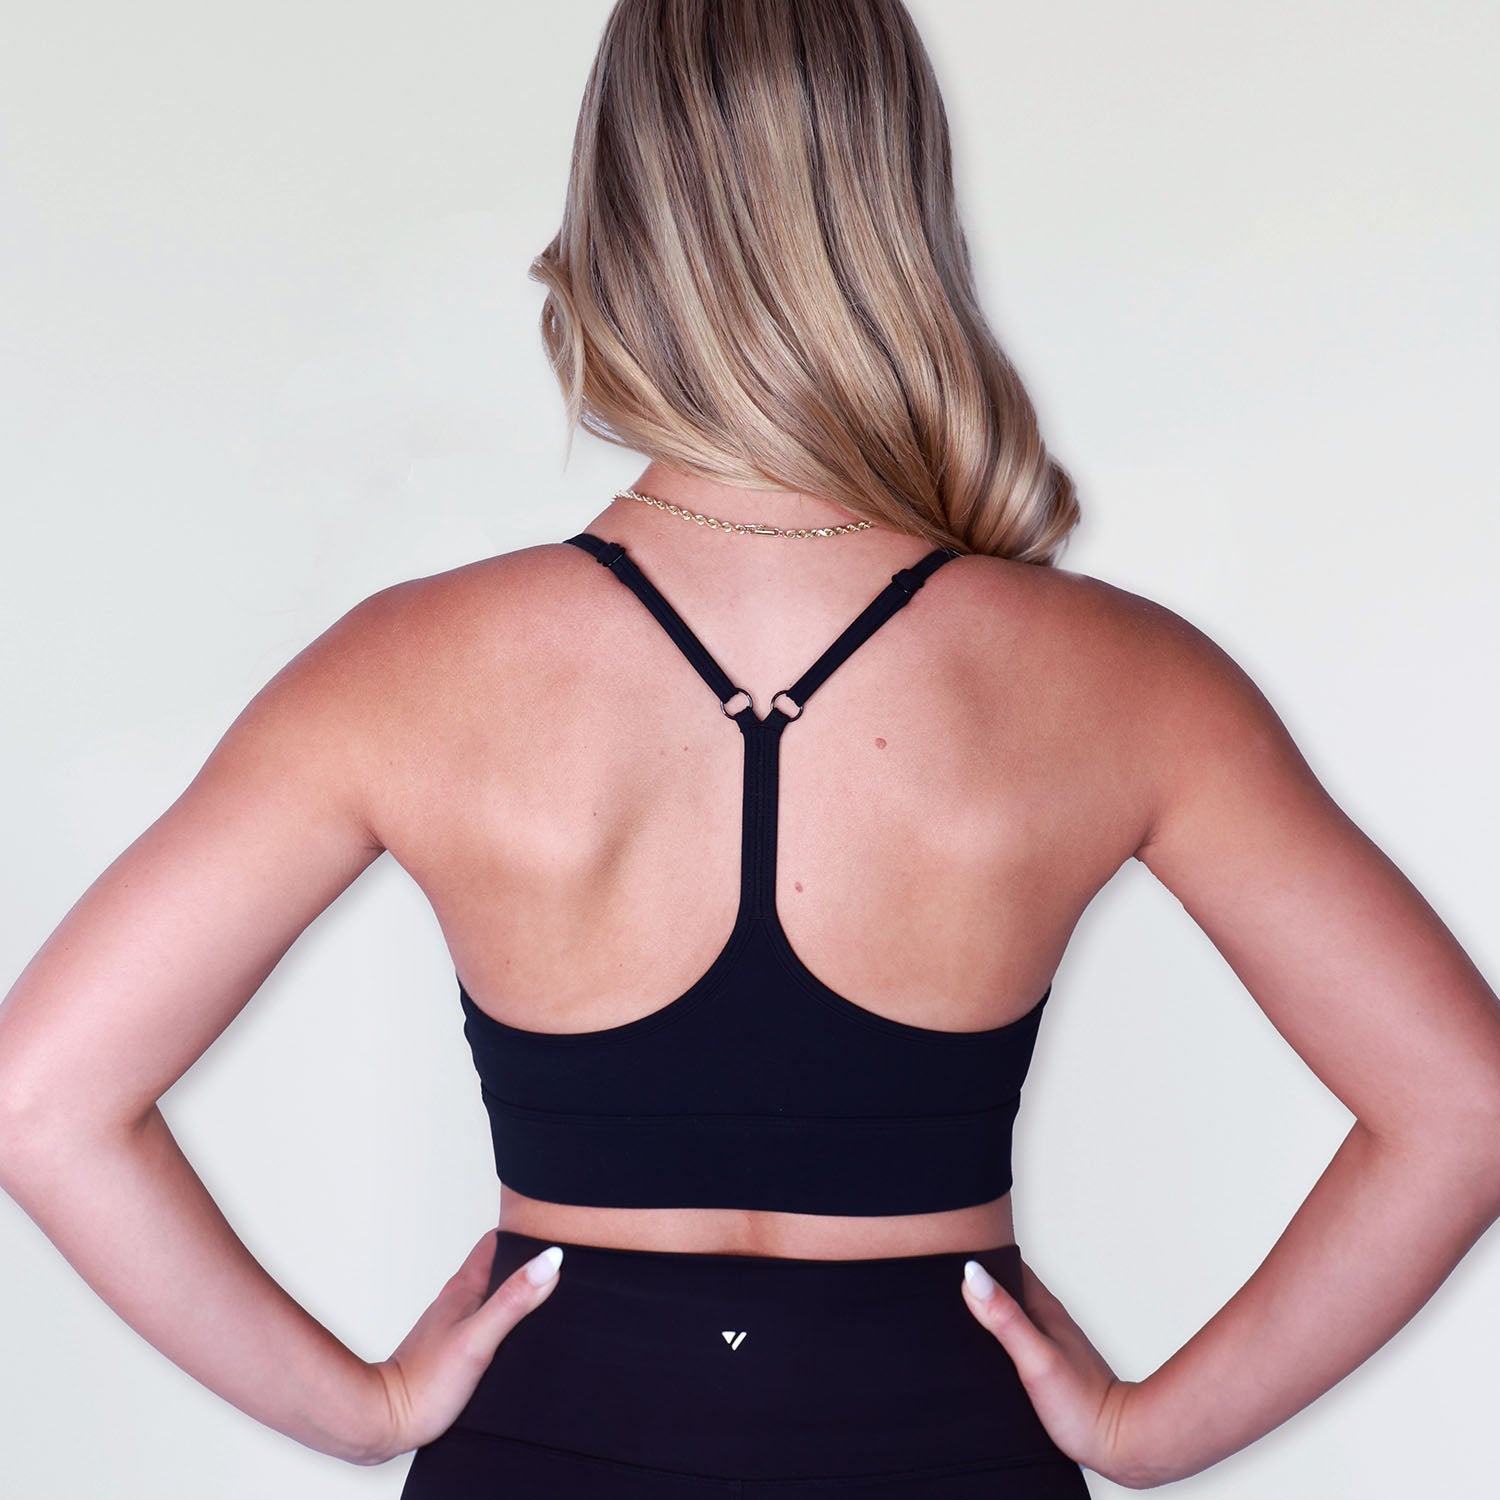 Strappy Low Back Bra for Women -Deep V Low Cut Backless Bralette